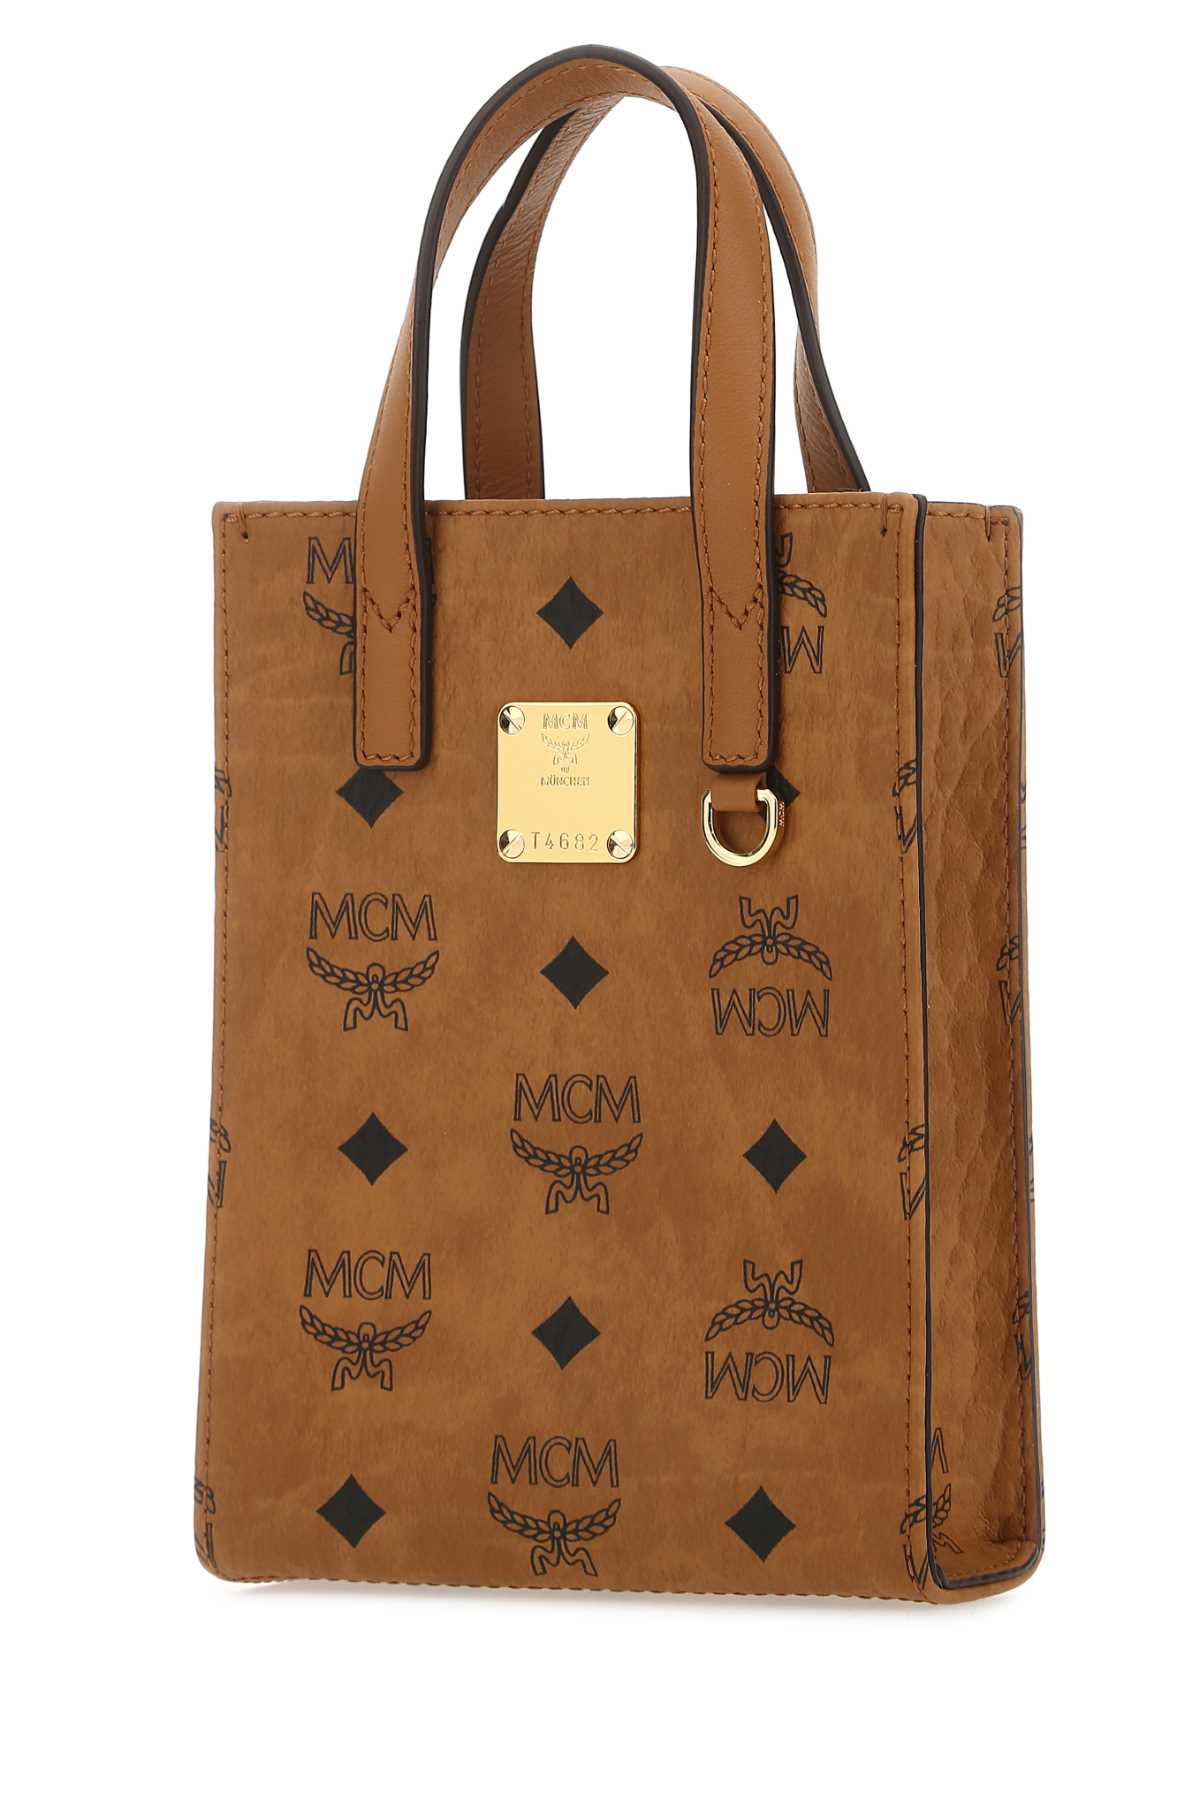 Mcm Printed Fabric Handbag In Co